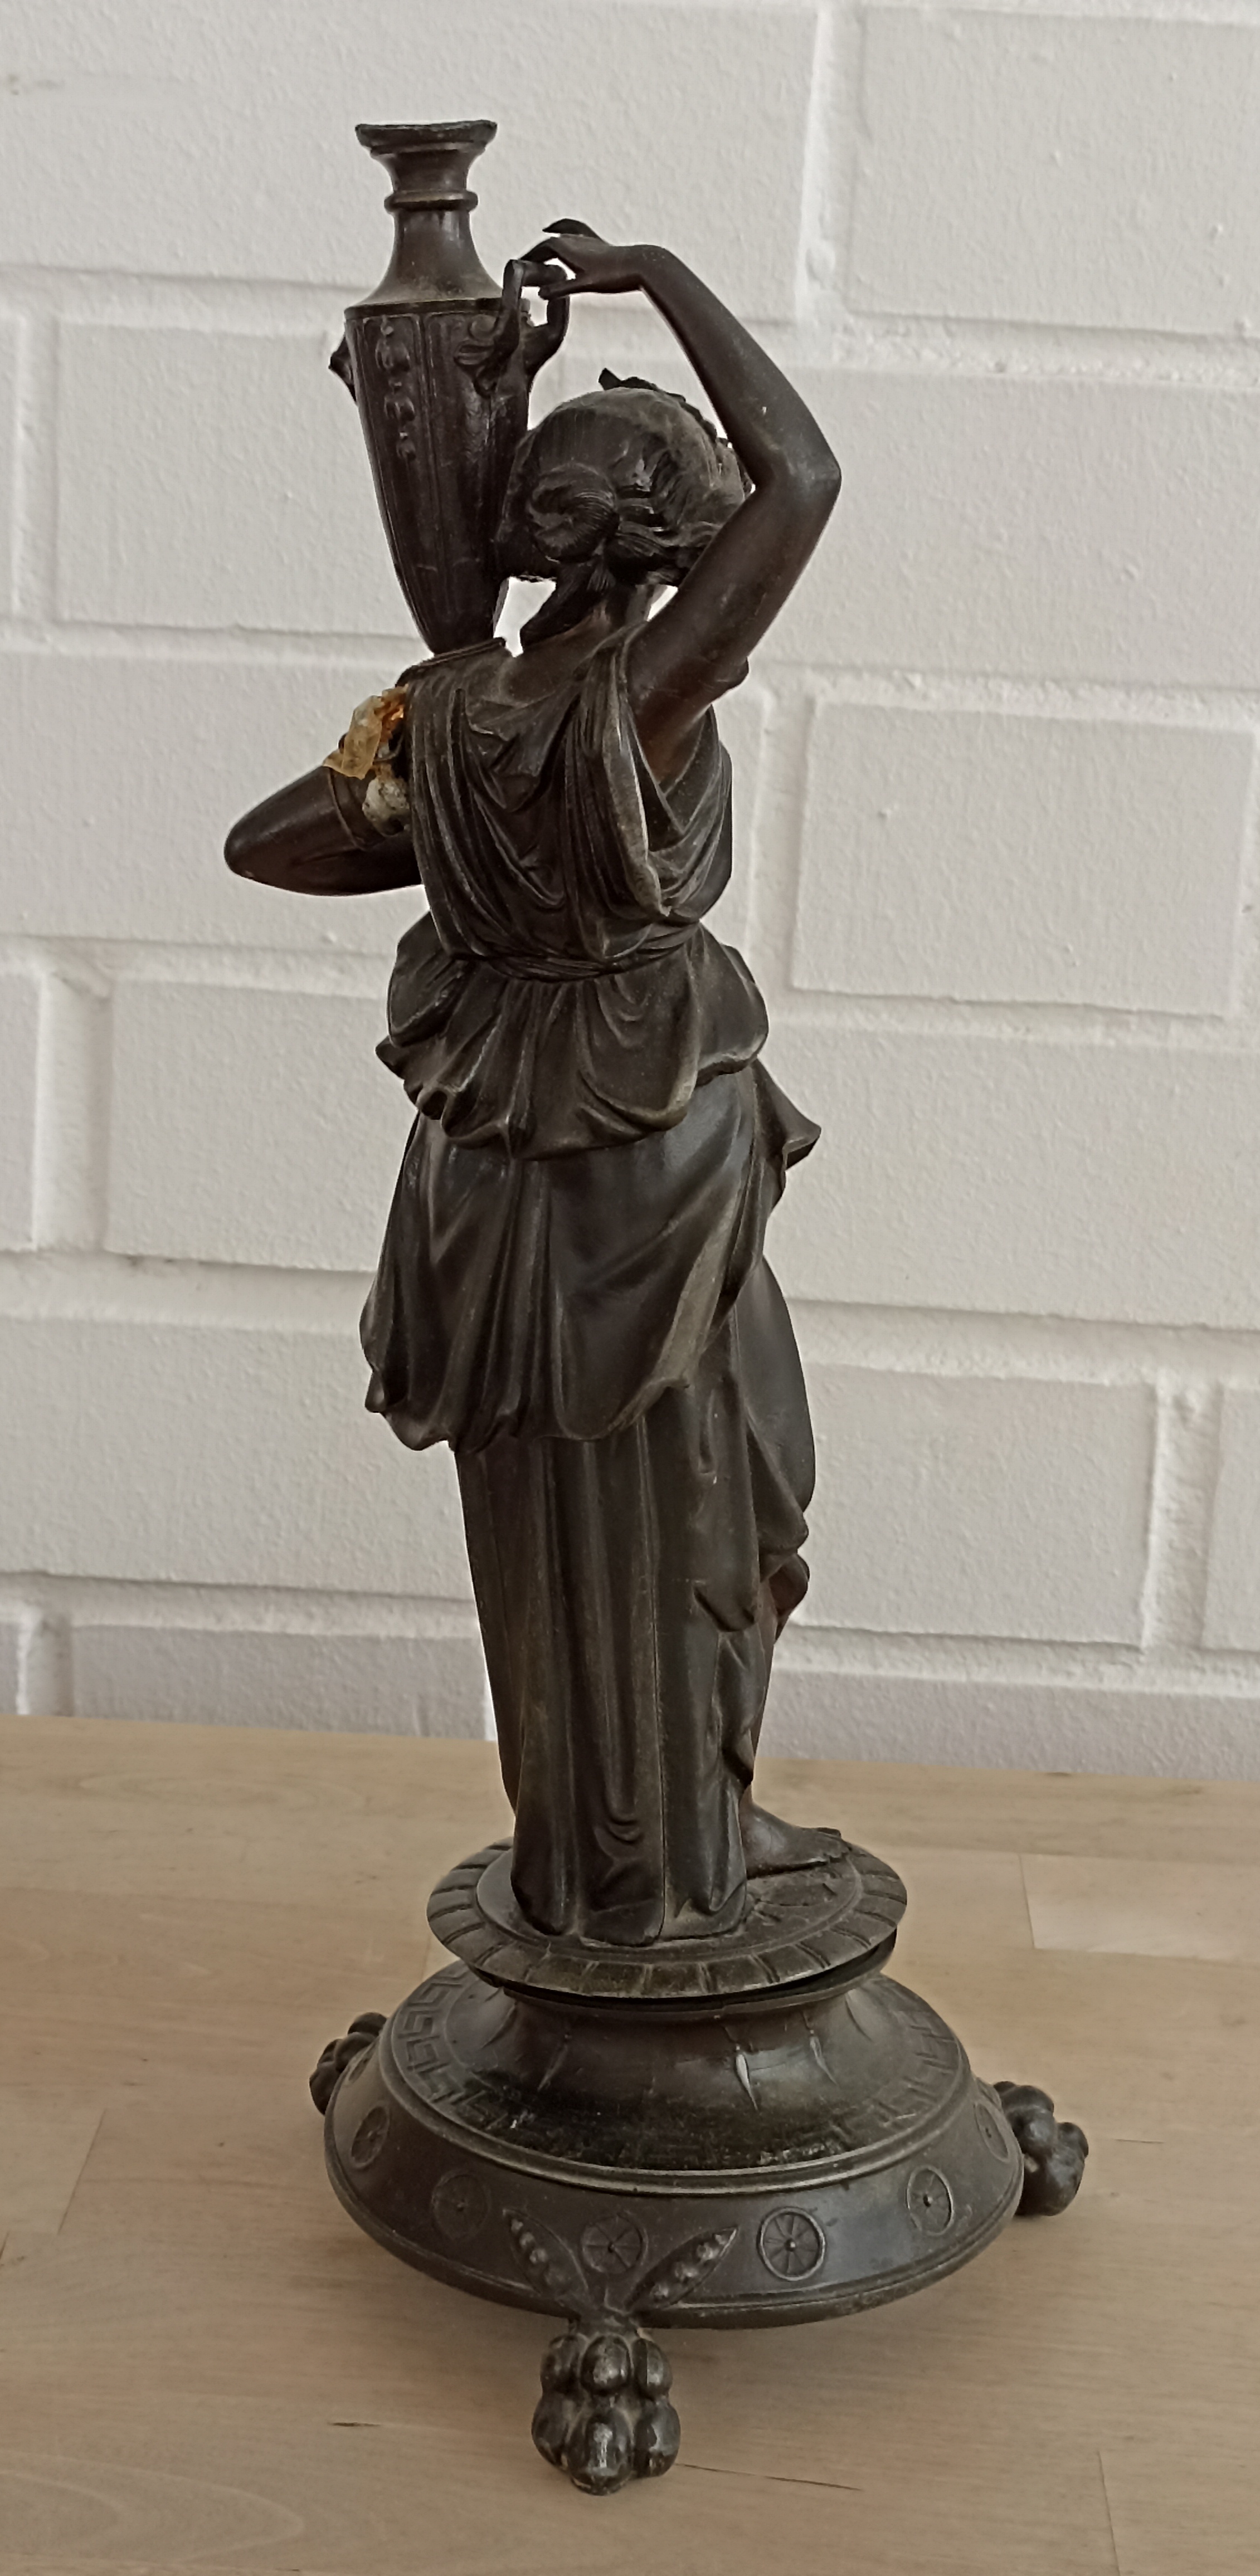 Figura femenina portando ánfora. Calamina bronceada (38x14) Siglo XIX